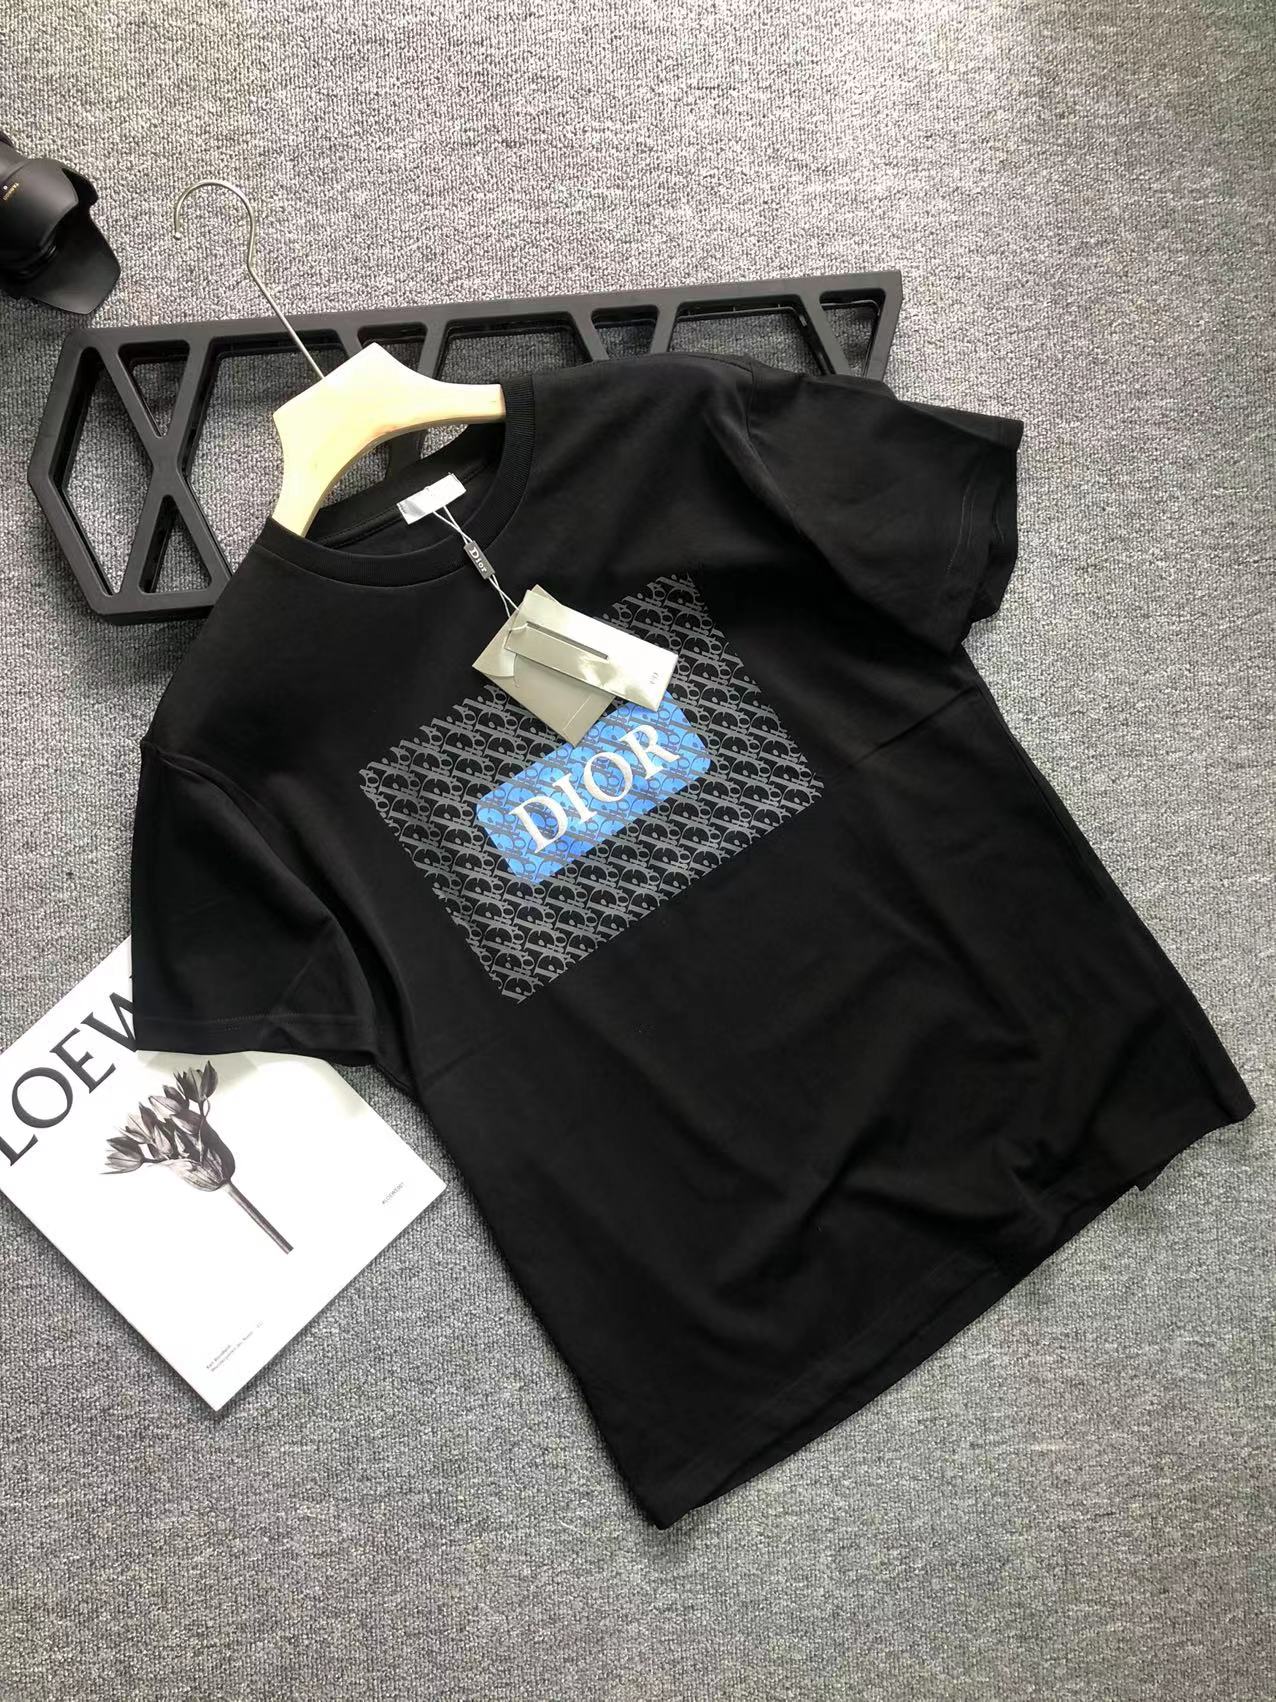 【  High quality  】Dior classic logo printed short sleeve T-shirt men women unisex